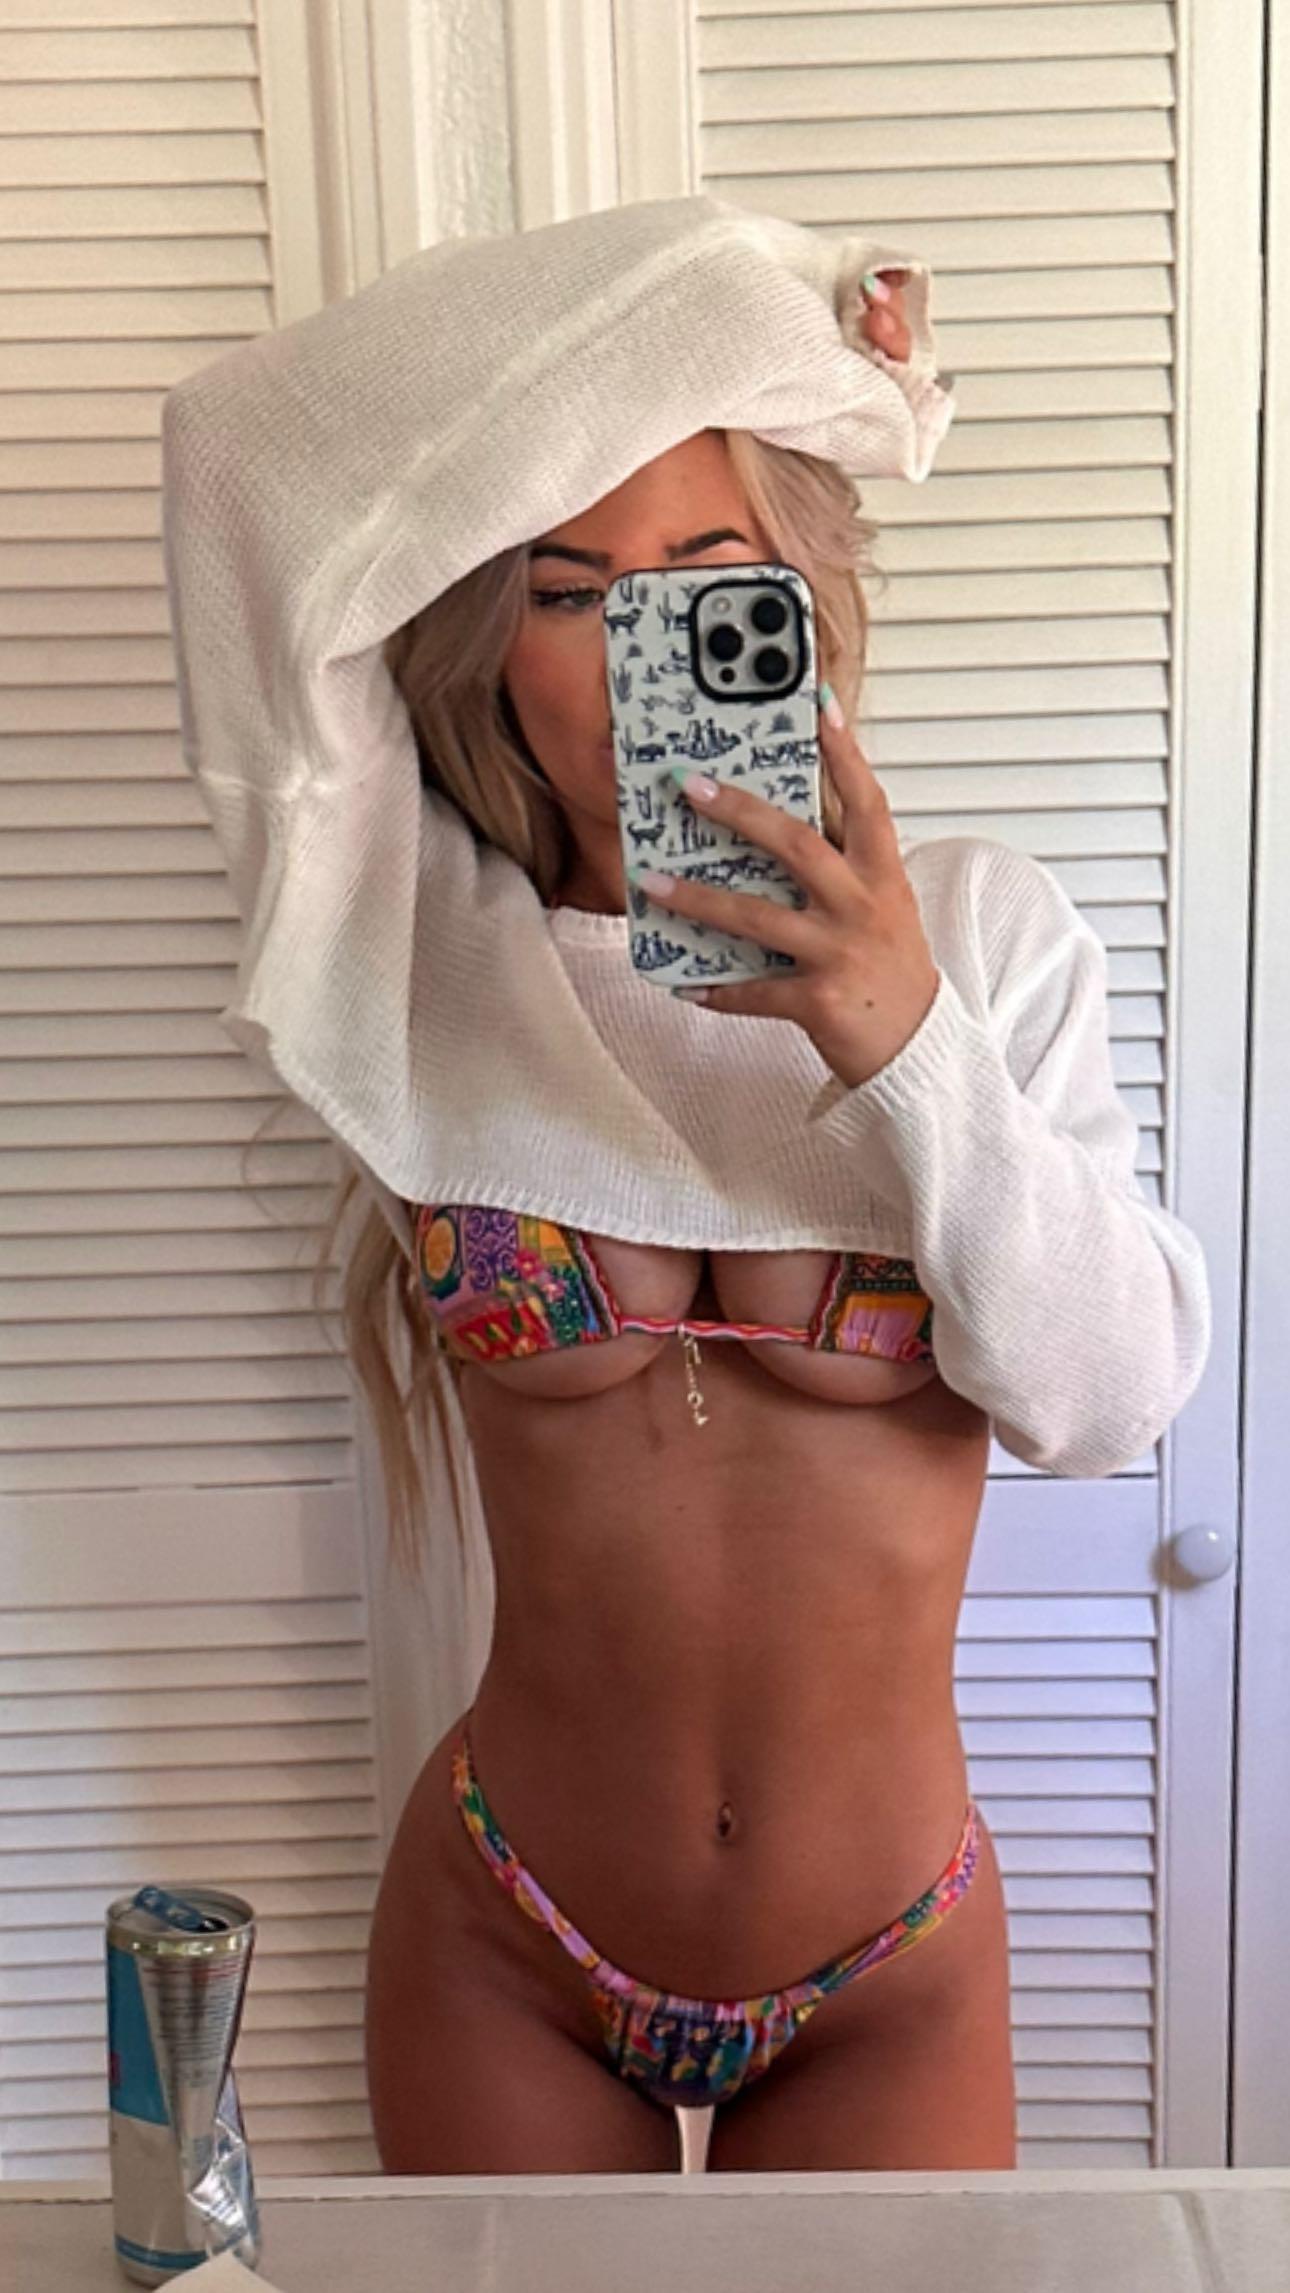 Emily Elizabeth snaps a selfie to show off her printed bikini.